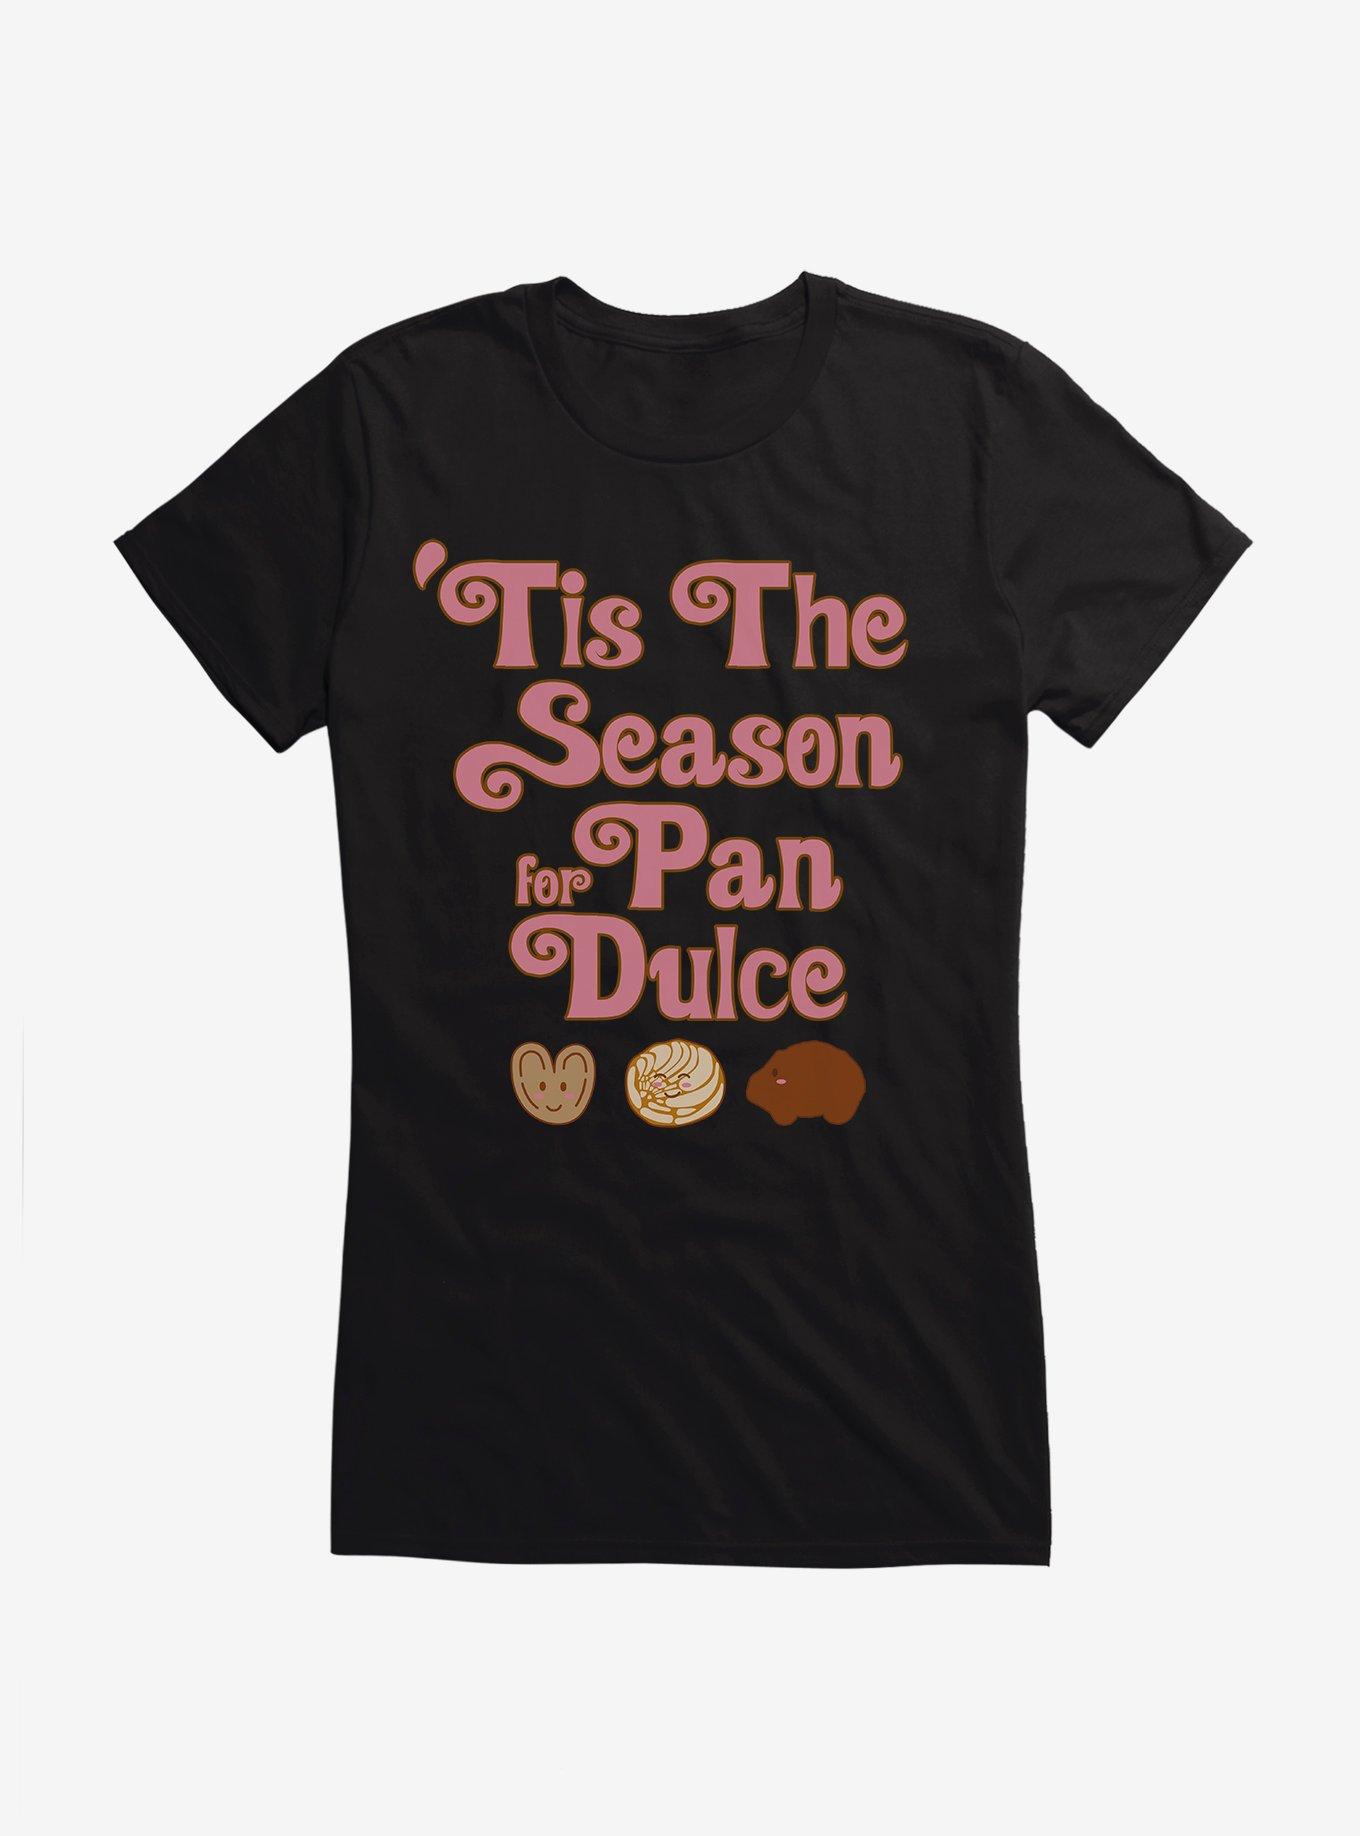 Hot Topic Tis The Season For Pan Dulce Girls T-Shirt